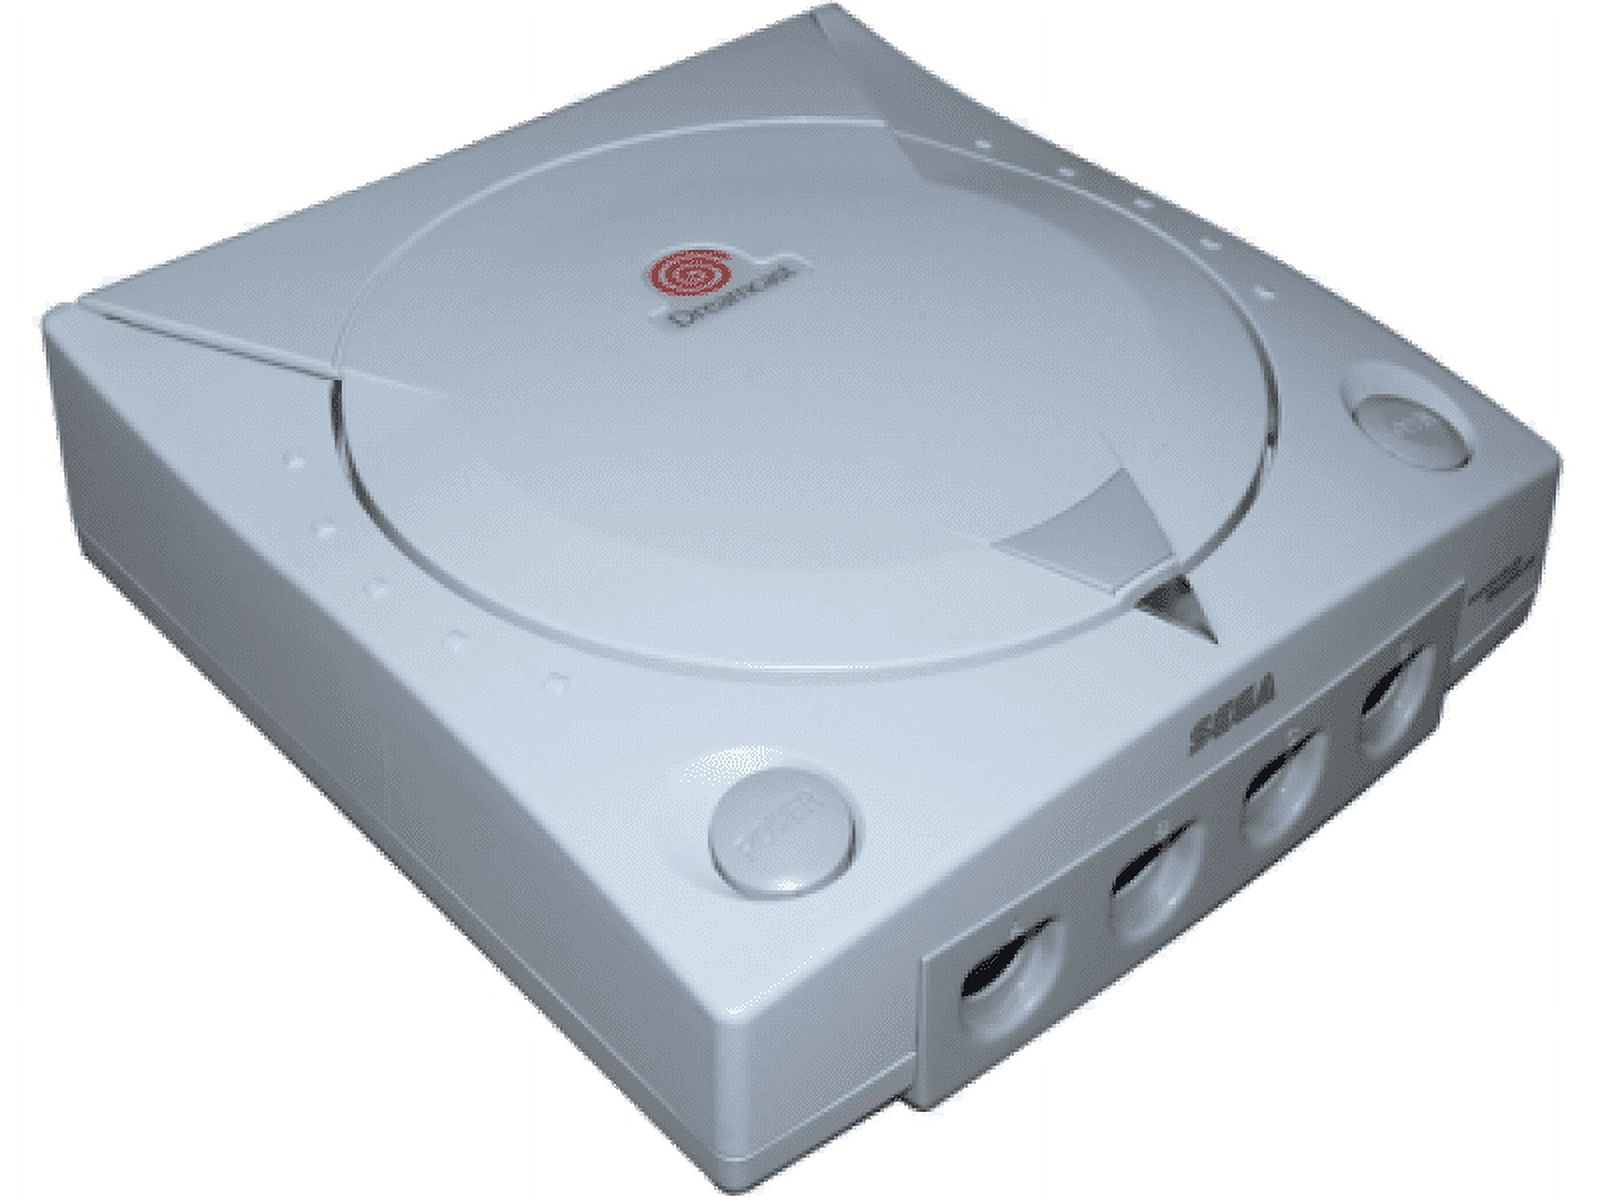 Restored Sega Dreamcast Console In White (Refurbished)